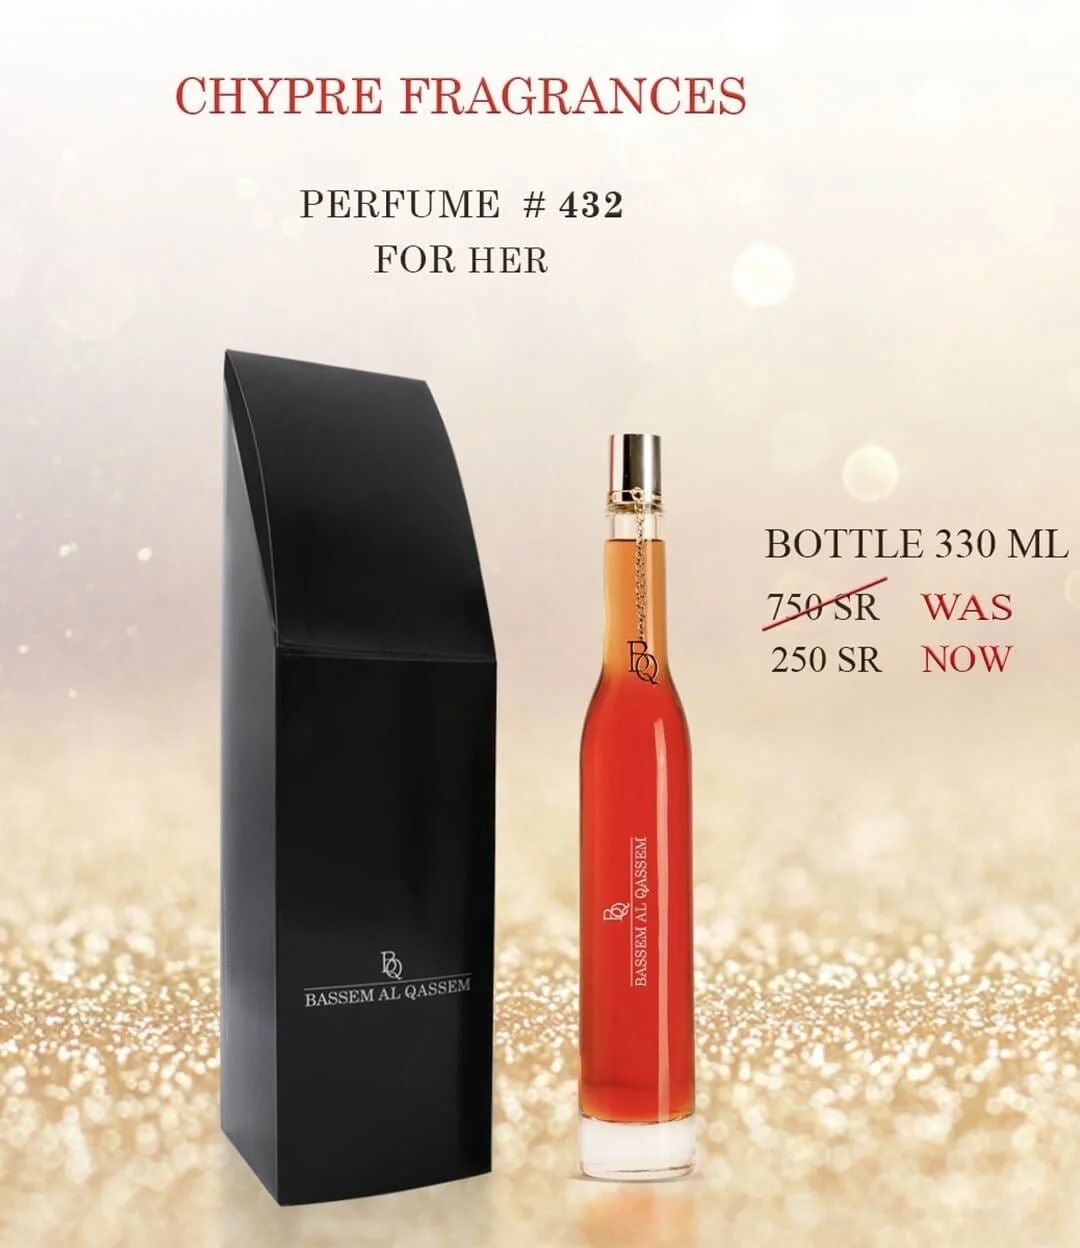 Perfume #432 Chypre Fragrance for Her by Bassem Al Qassem 